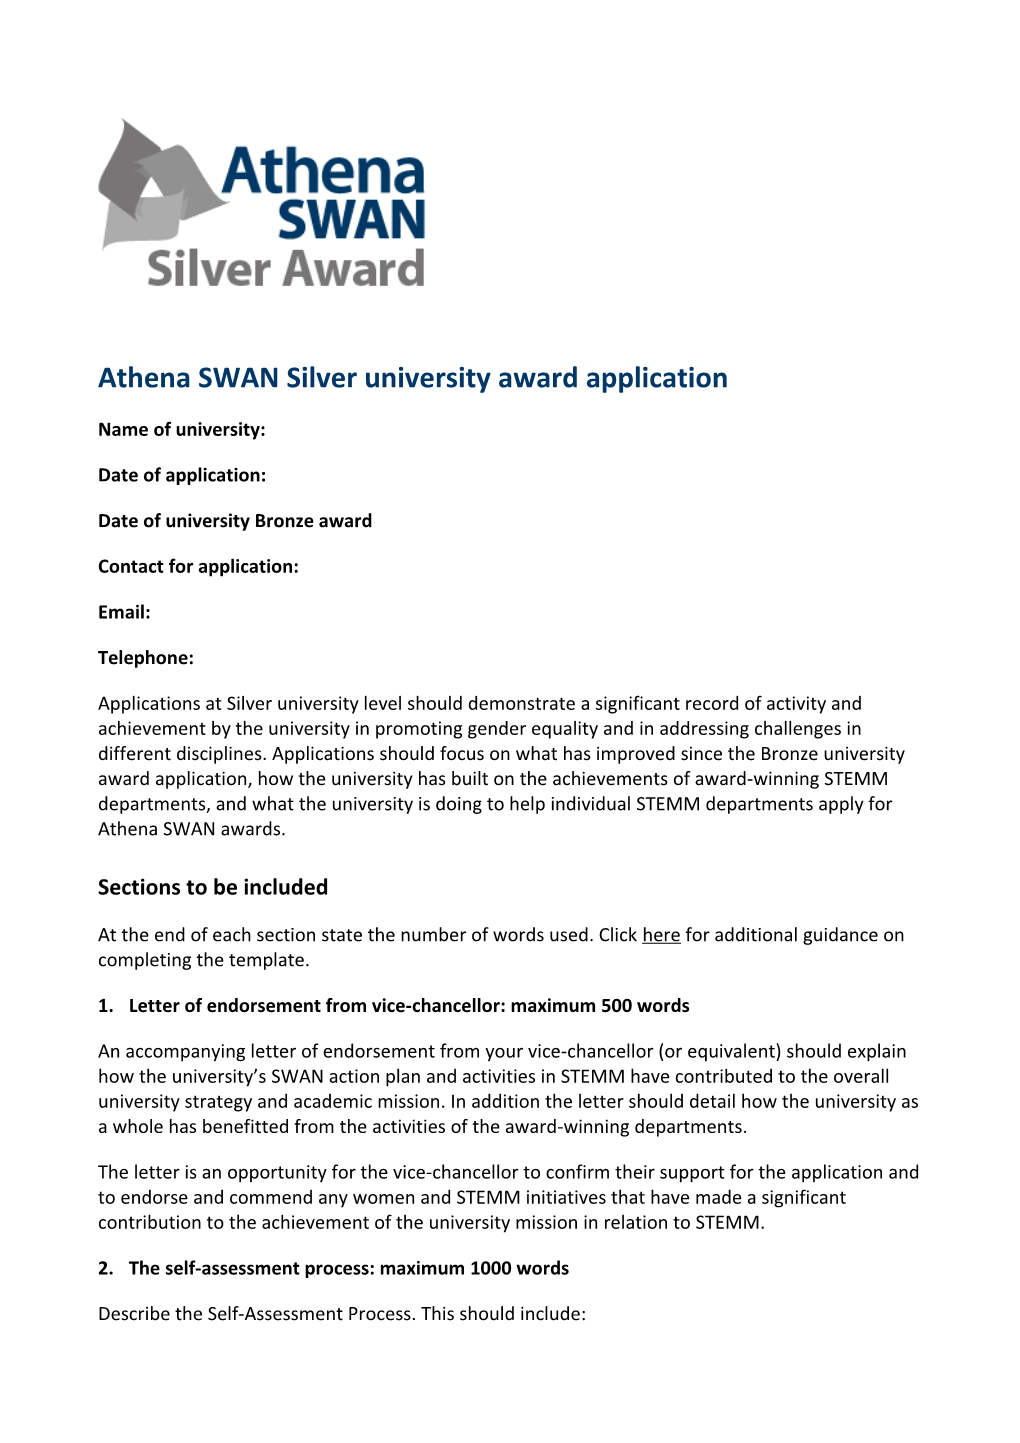 Athena SWAN Silver University Award Application